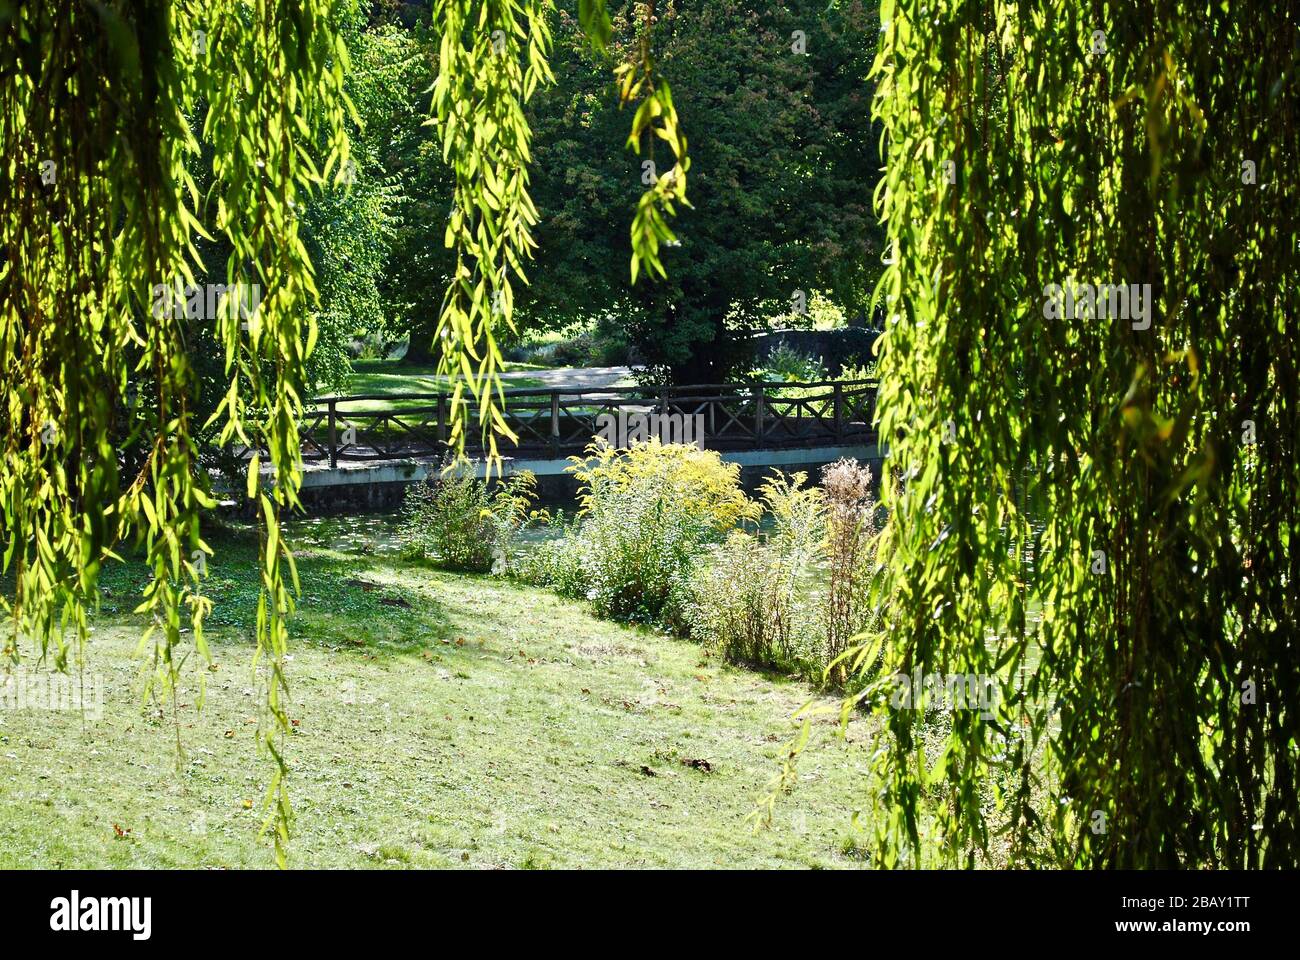 Willow trees frame a sunny park. Kurpark Bad Nauheim, Germany. Stock Photo